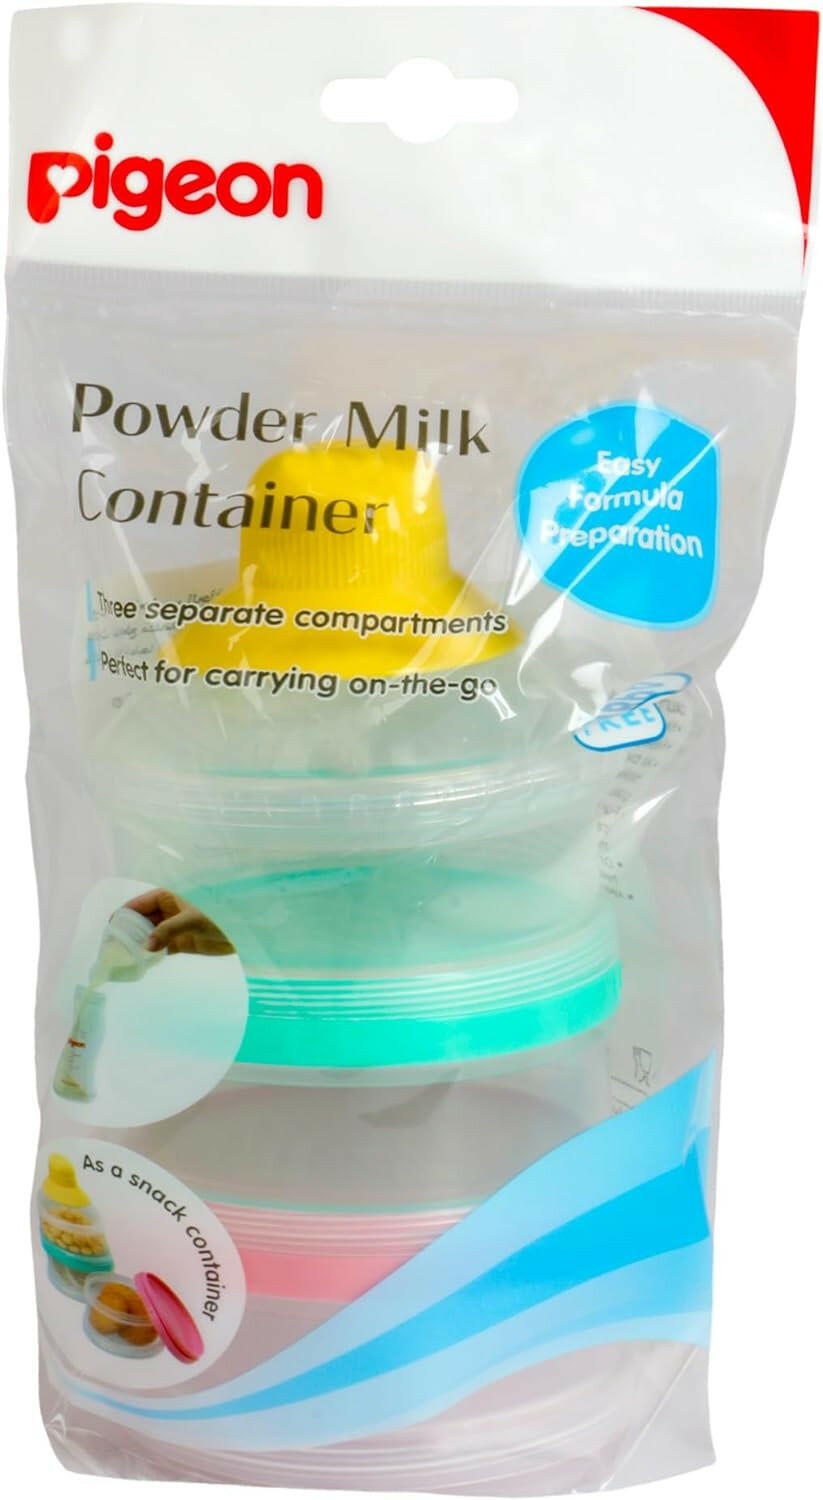 Pigeon Portable Powder Milk Container